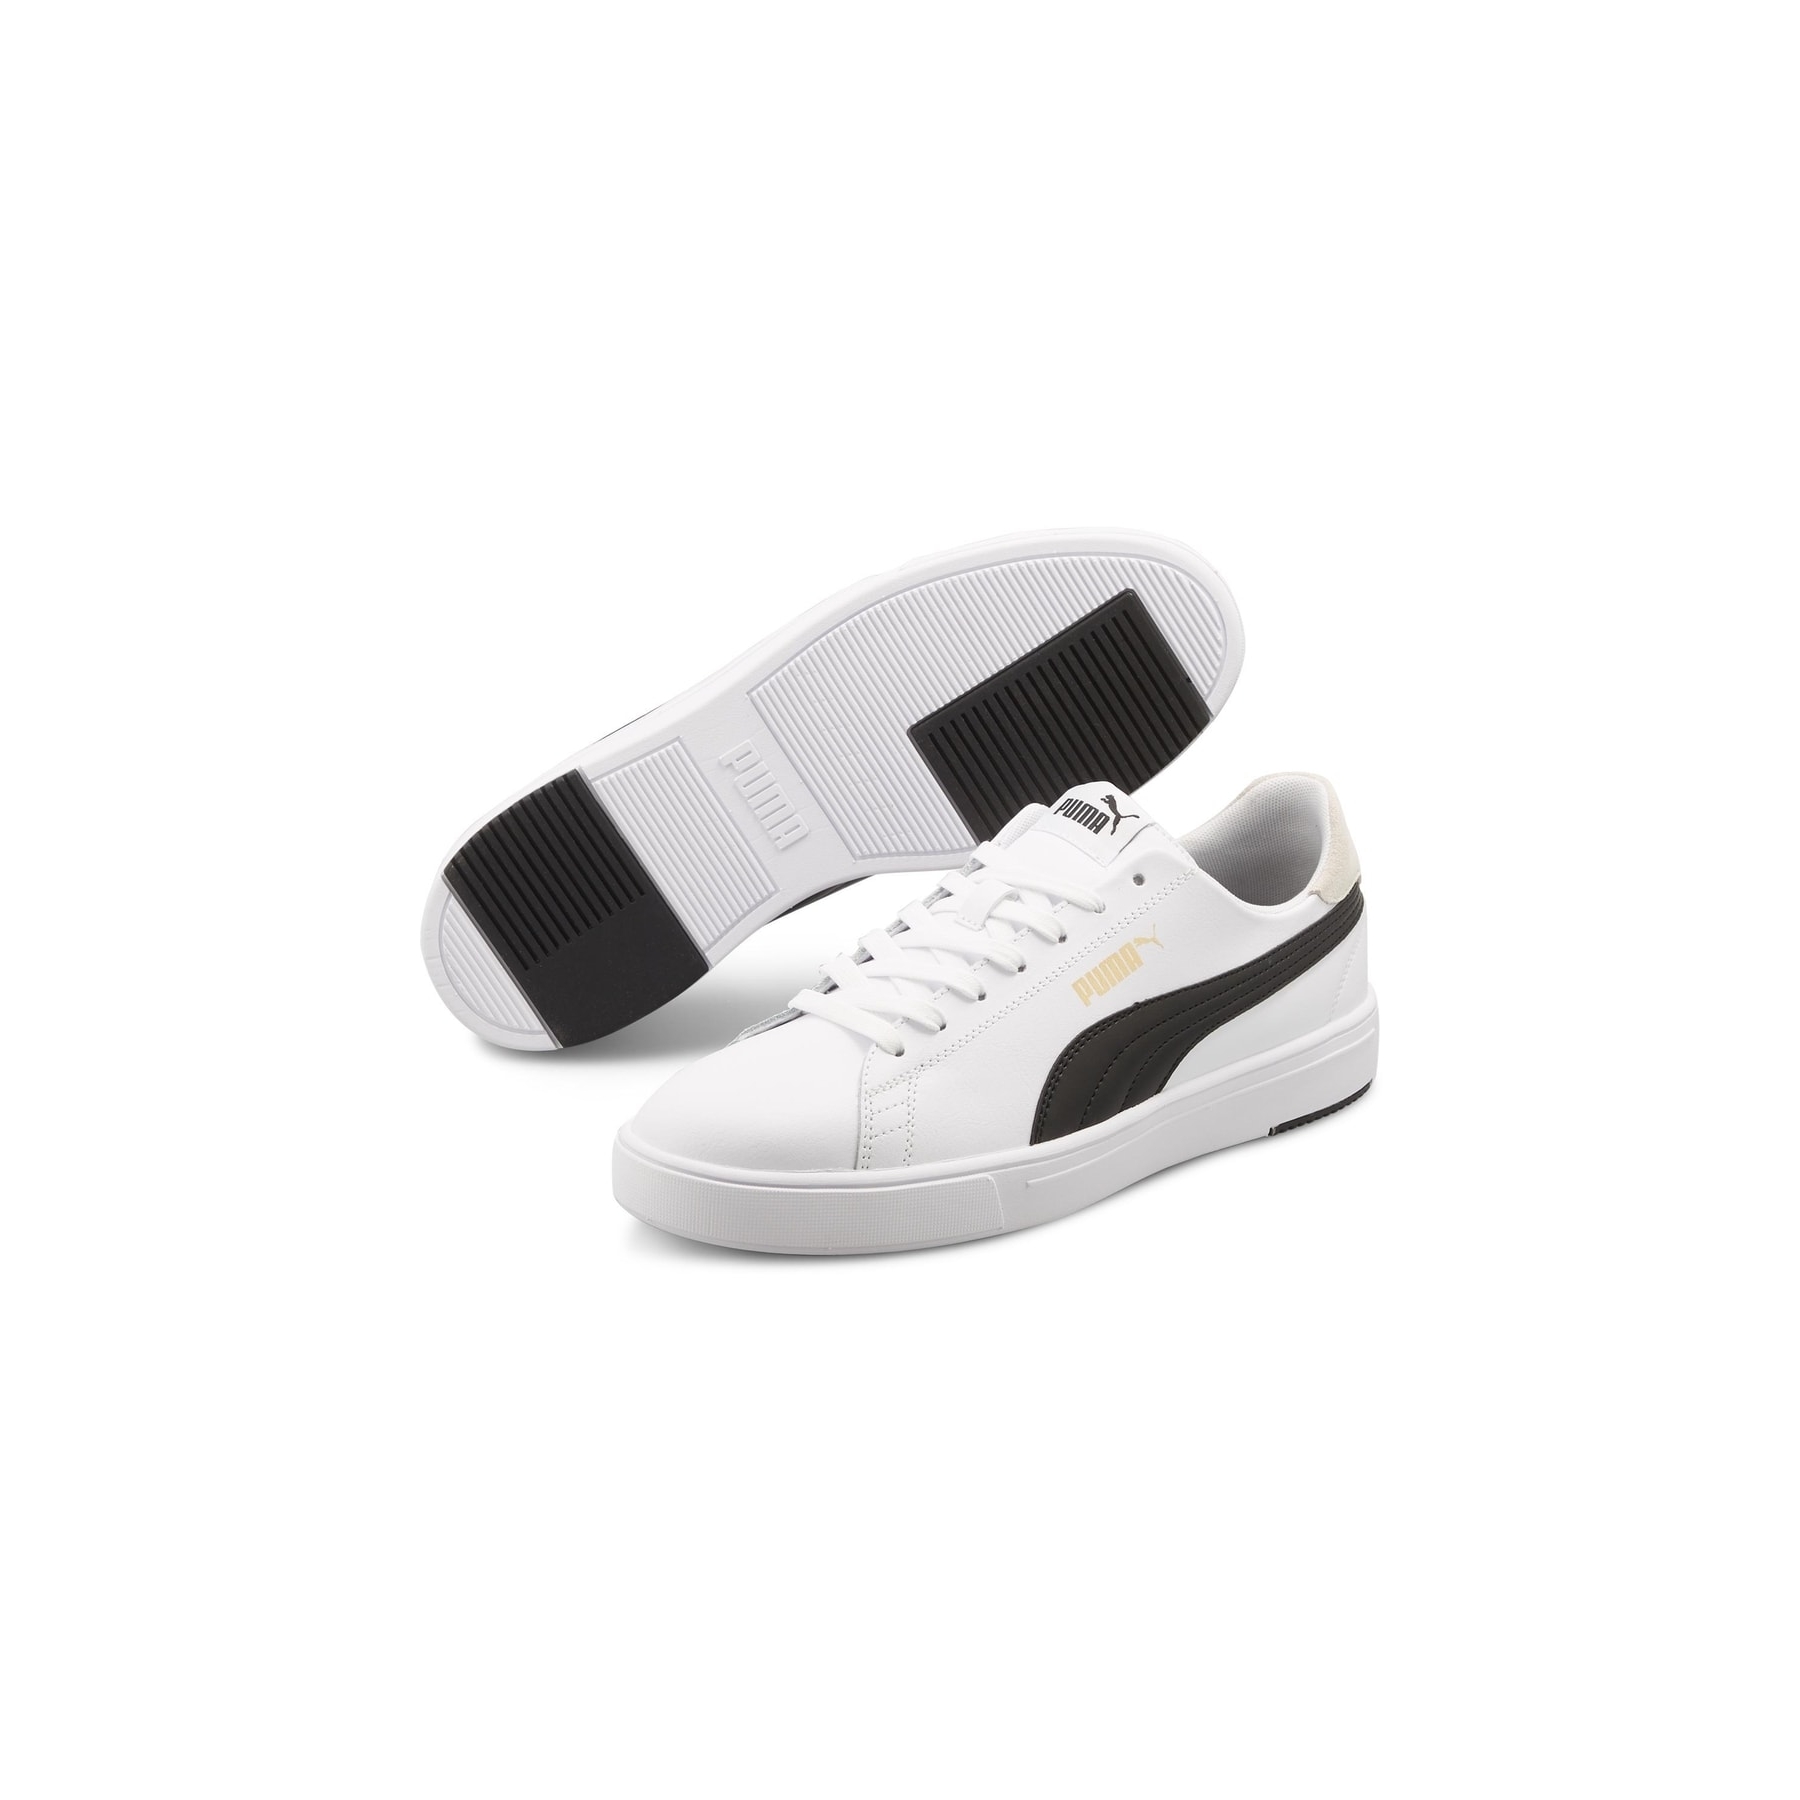 Puma Serve Pro Lite Beyaz Spor Ayakkabı (374902-08)